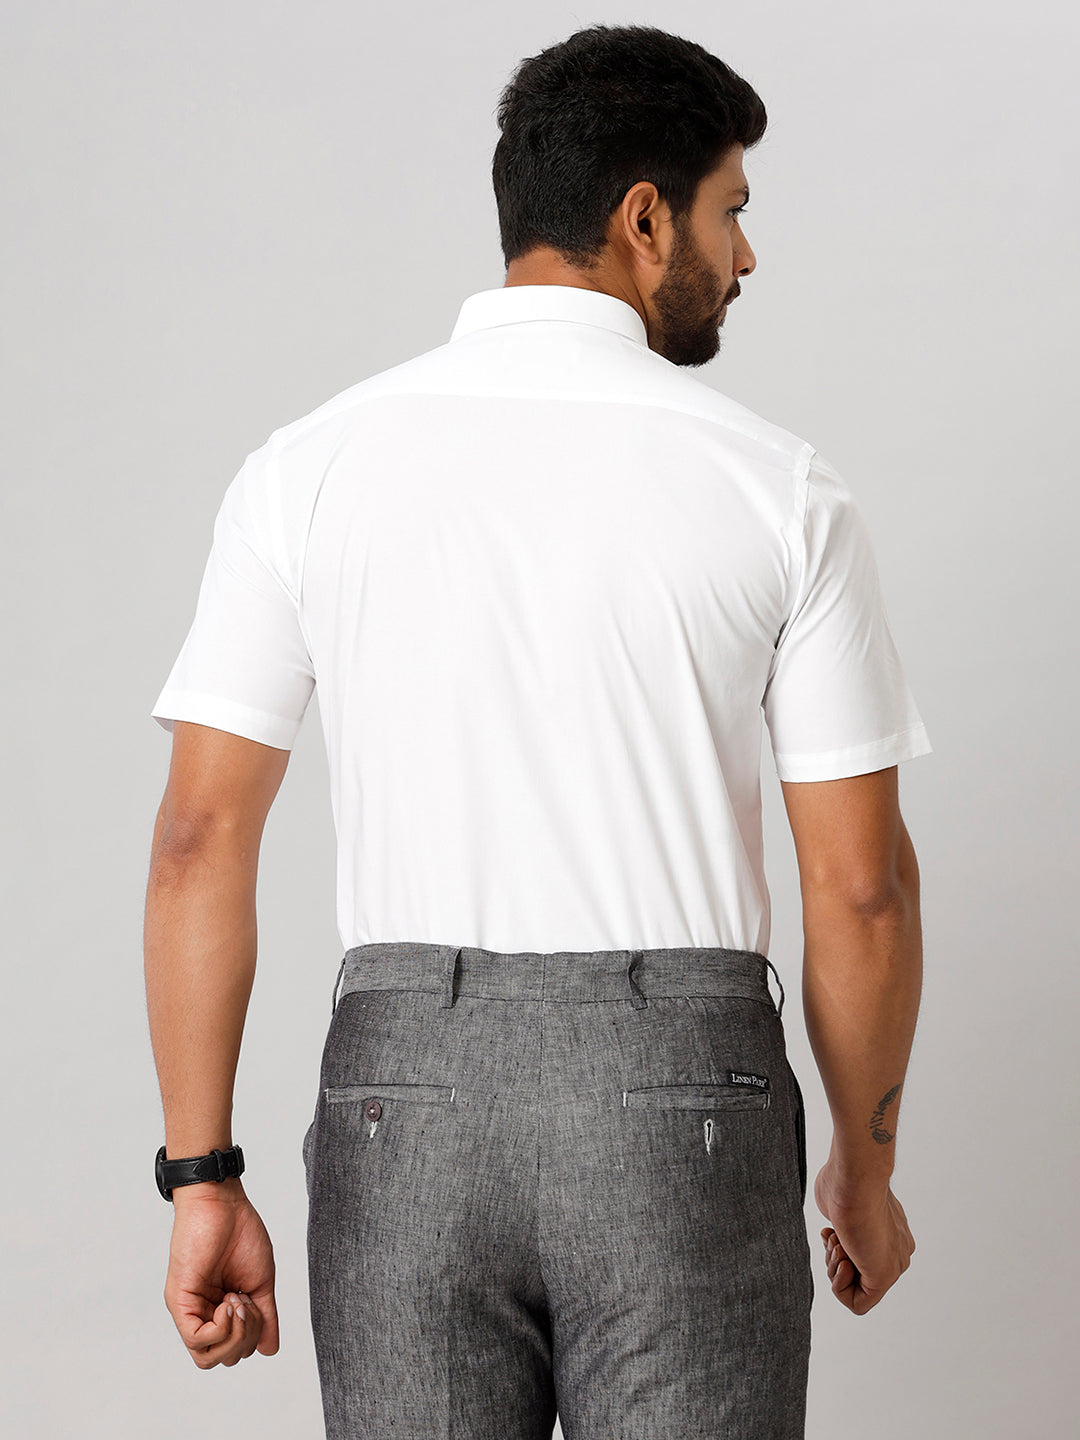 Mens Uniform Pure Cotton White Shirt Half Sleeves-Back view